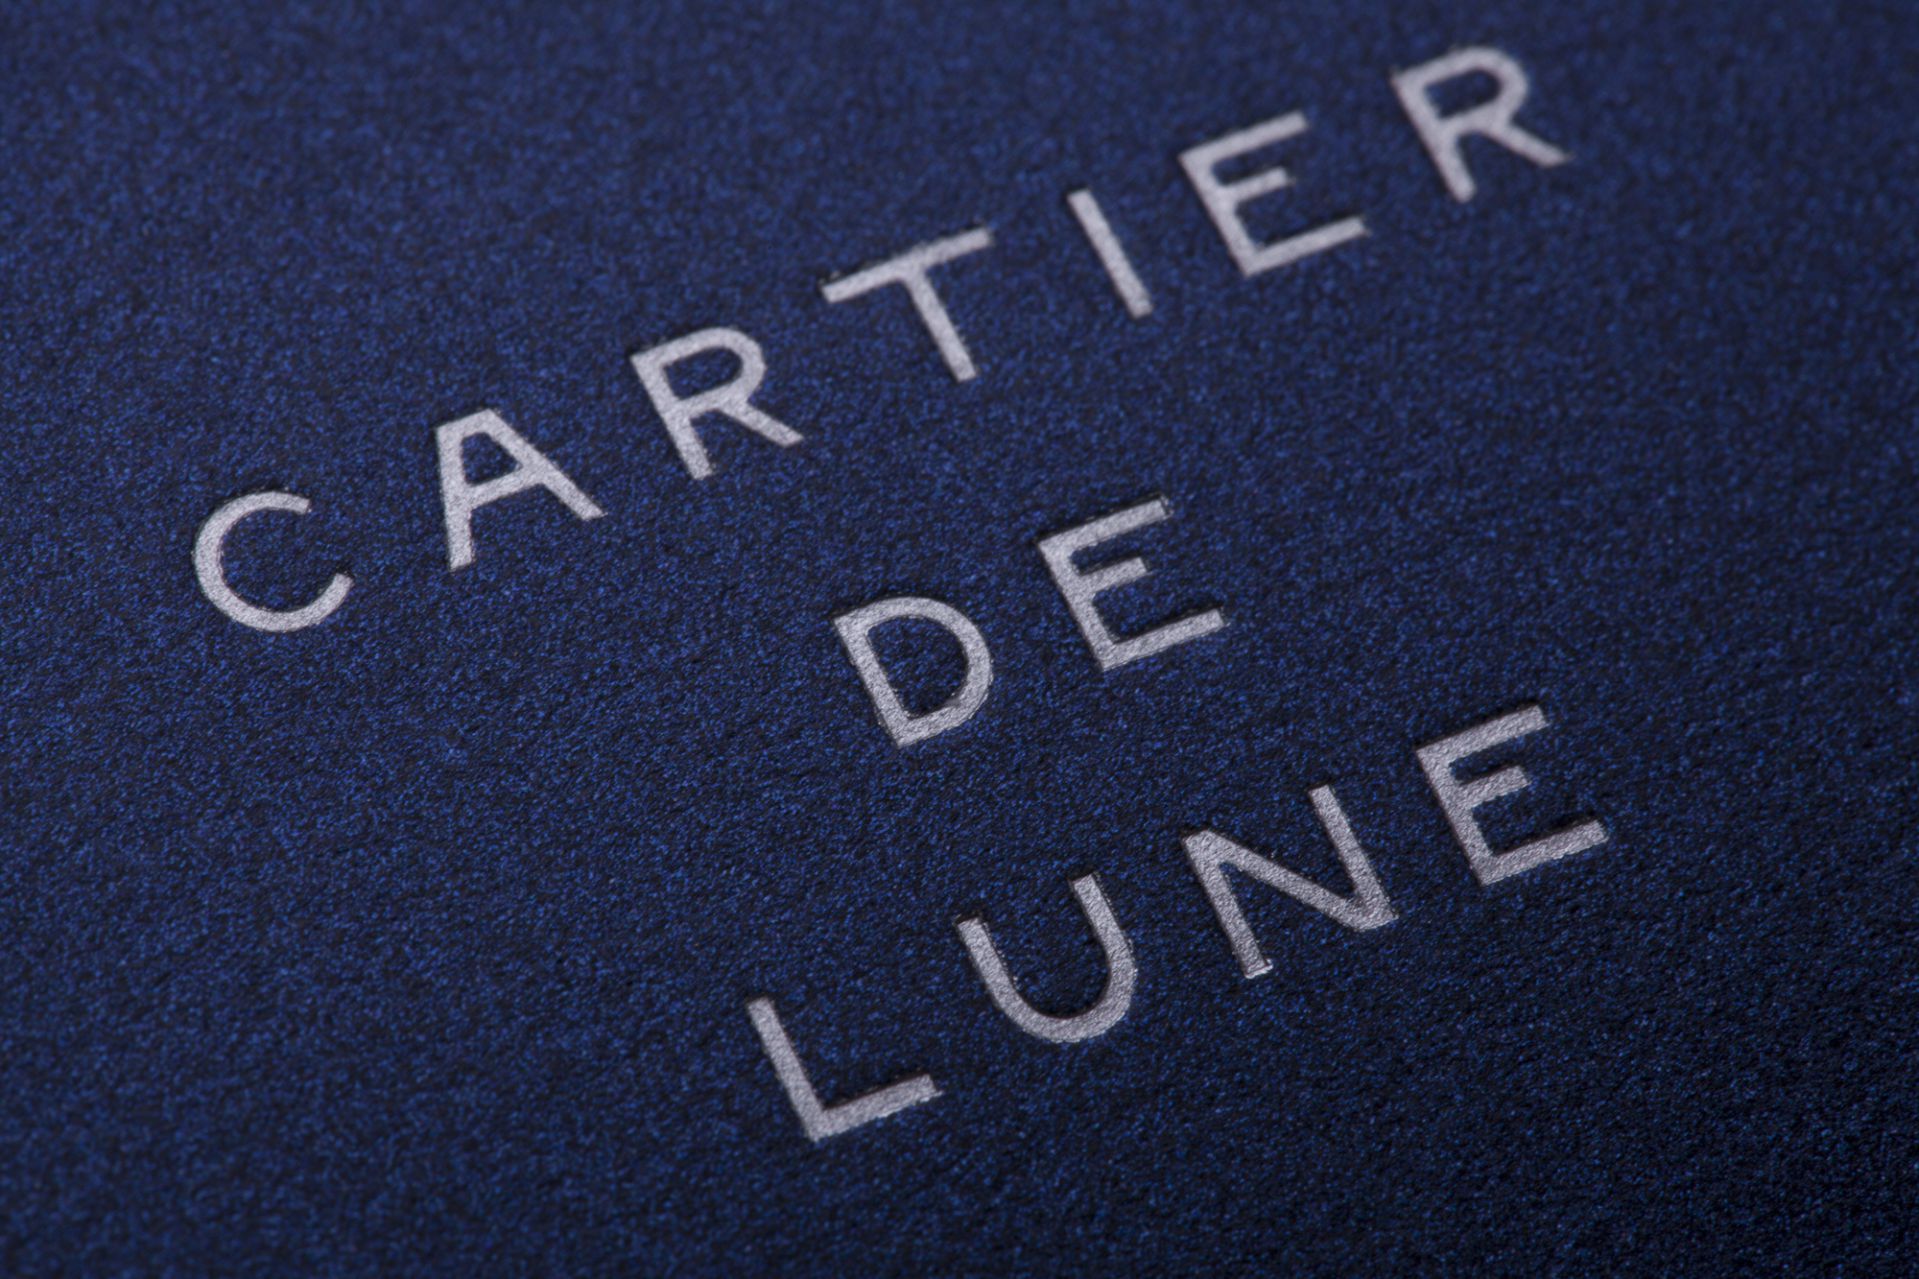 Cartier Sans-serif